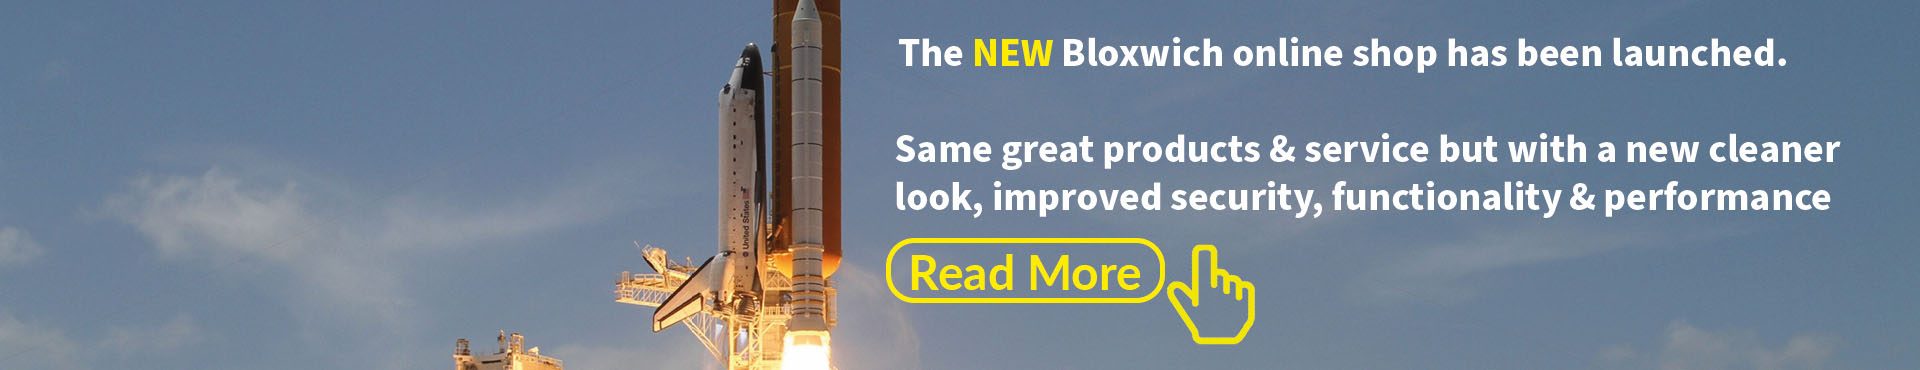 www.bloxwichdoorgear.com new online shop launched